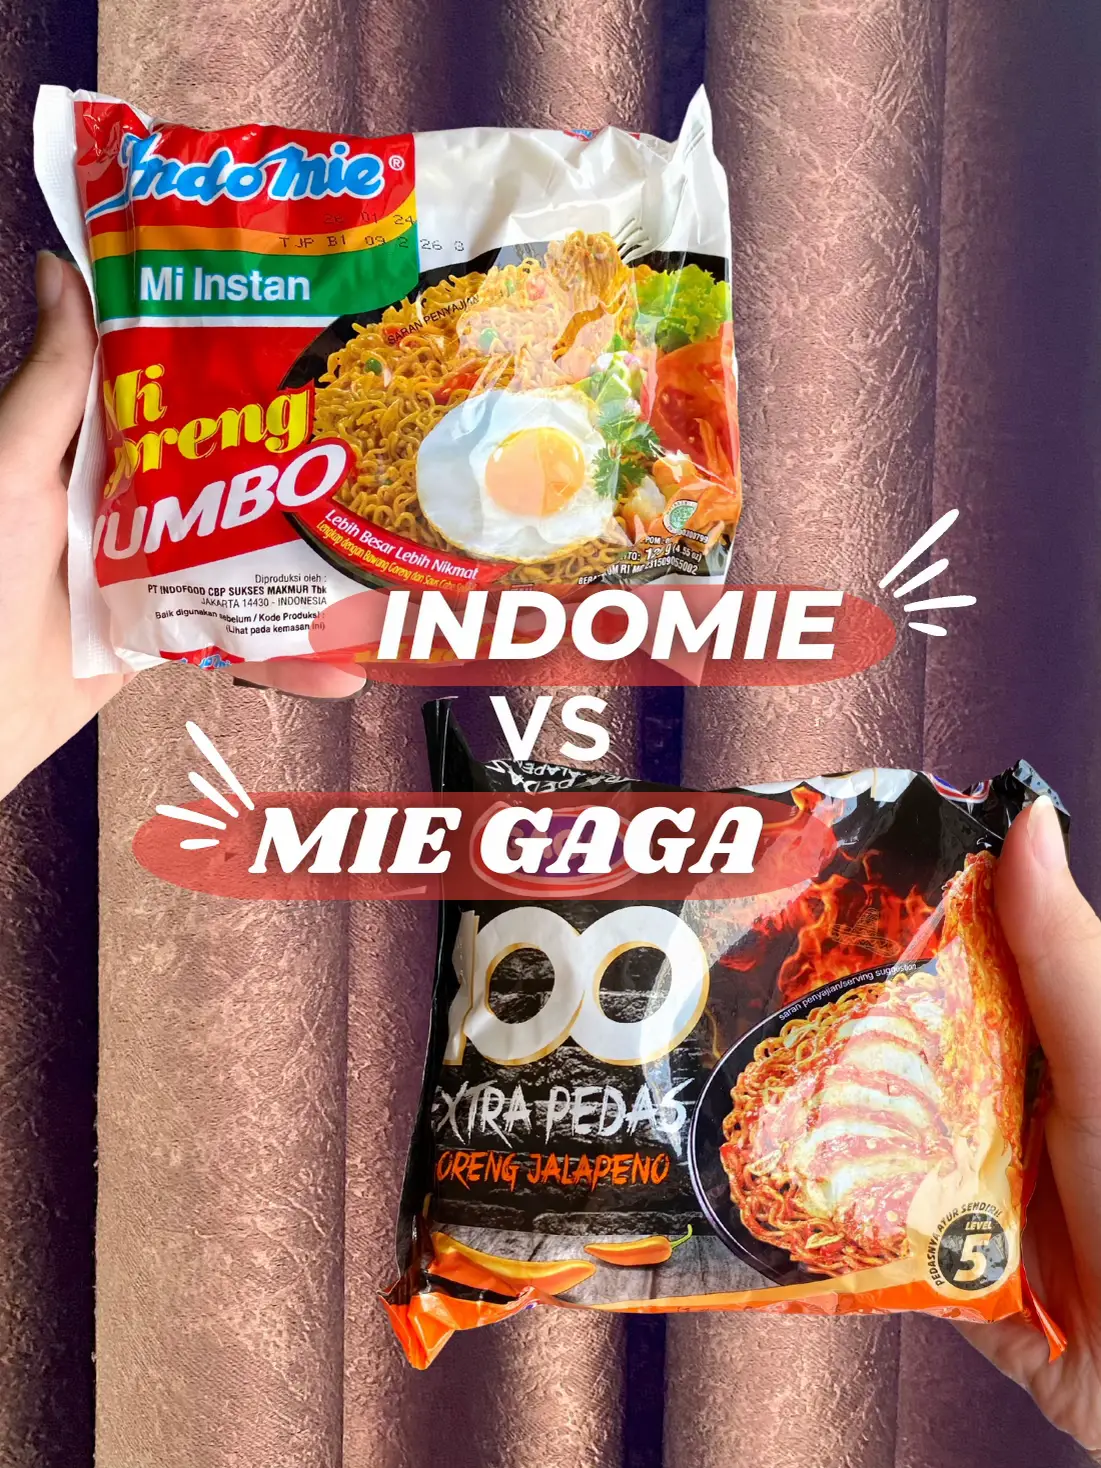 Mie Gaga vs. Indomie